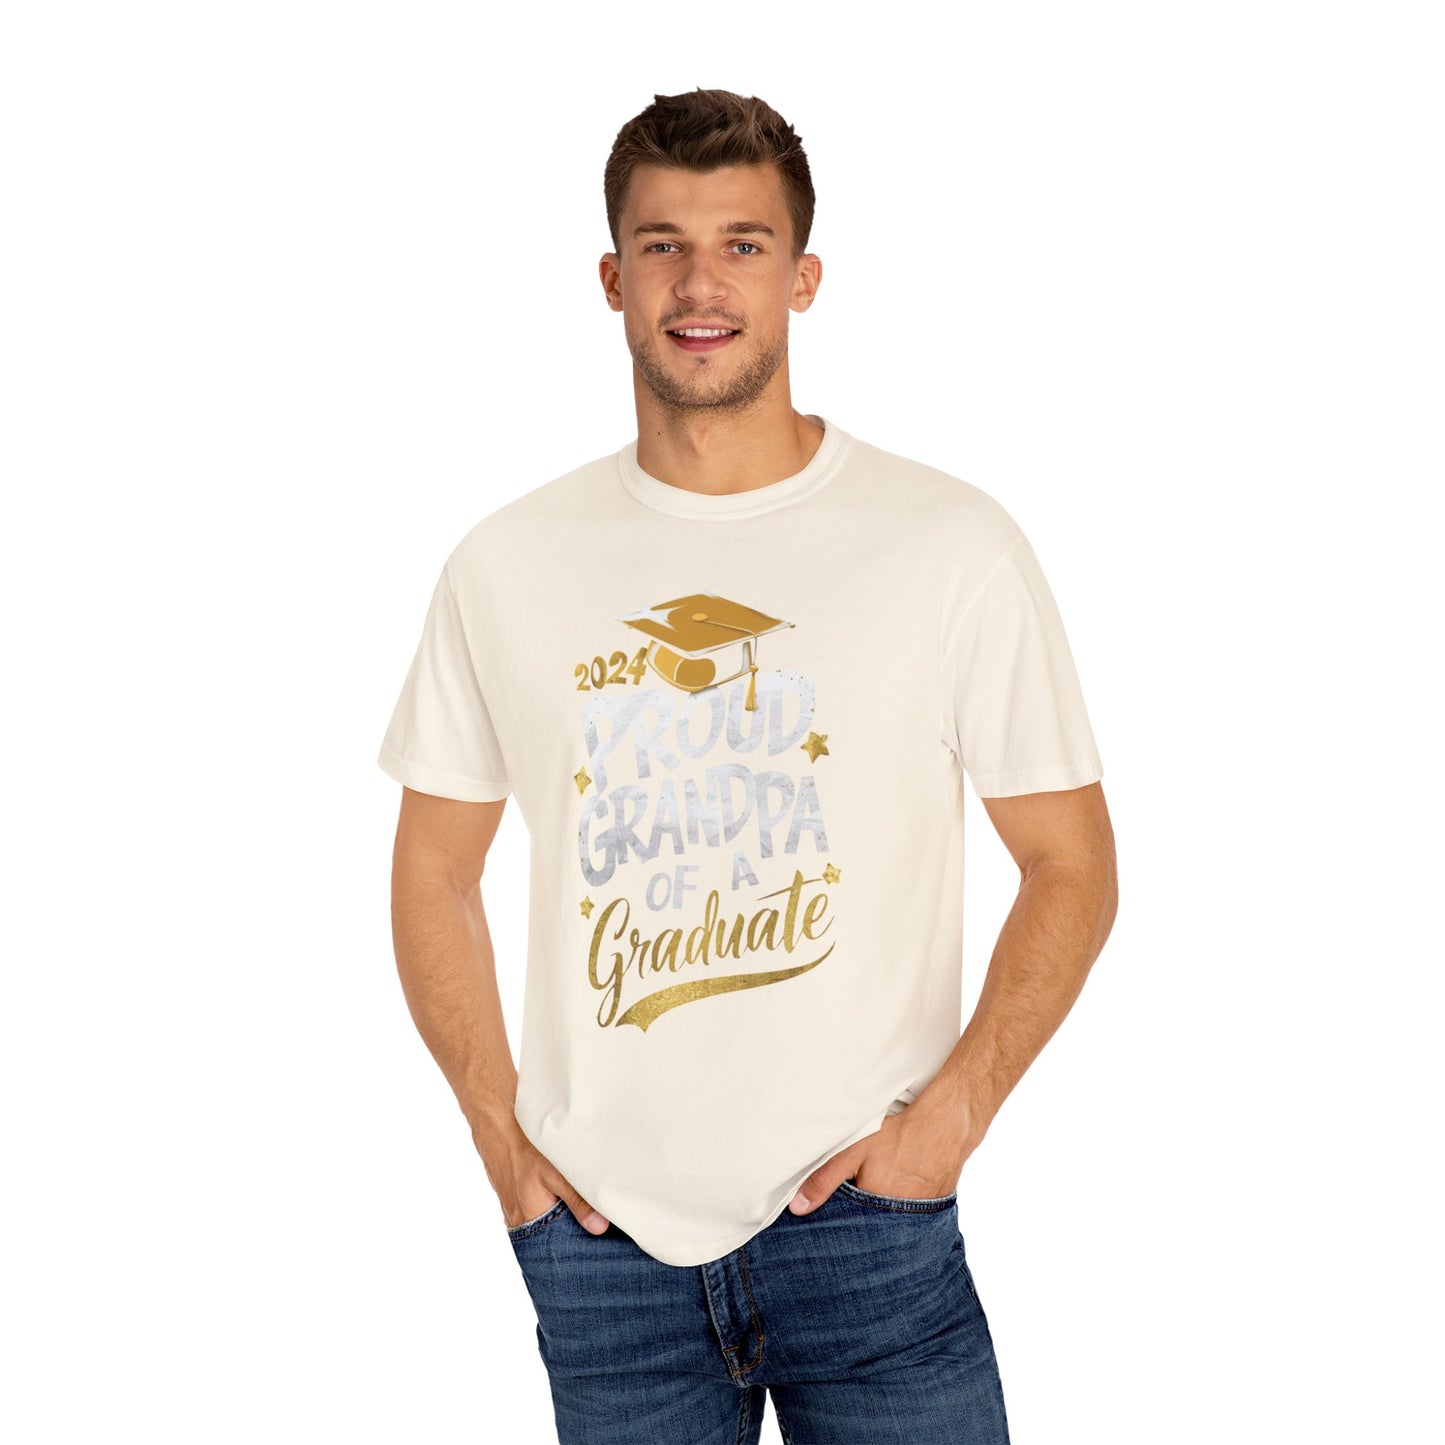 Proud Grandpa of a 2024 Graduate Unisex Garment-dyed T-shirt Cotton Funny Humorous Graphic Soft Premium Unisex Men Women Ivory T-shirt Birthday Gift-45